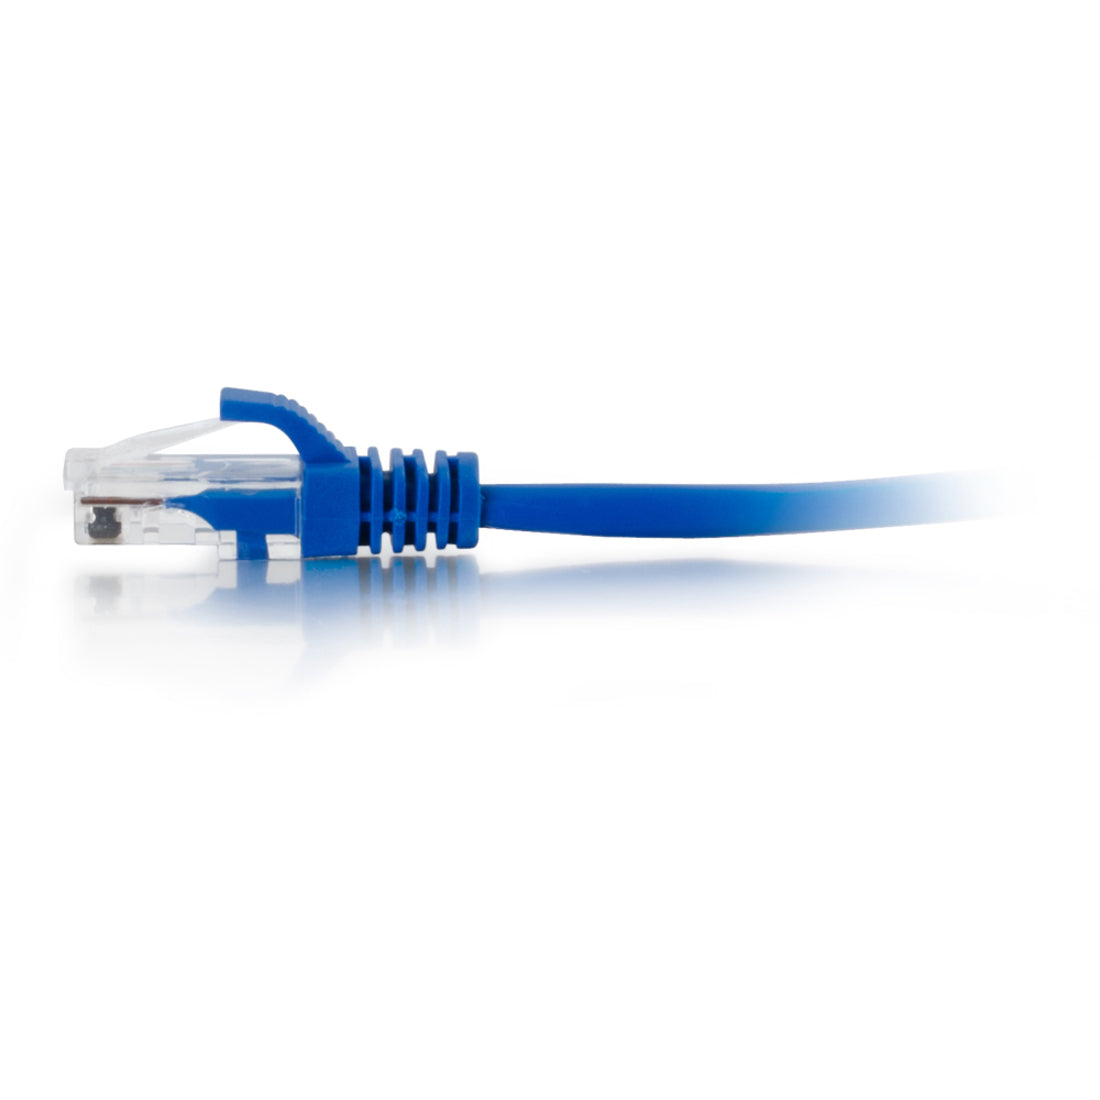 C2G 15193 7ft Cat5e Unshielded Ethernet Cable - Blue, Network Patch Cable